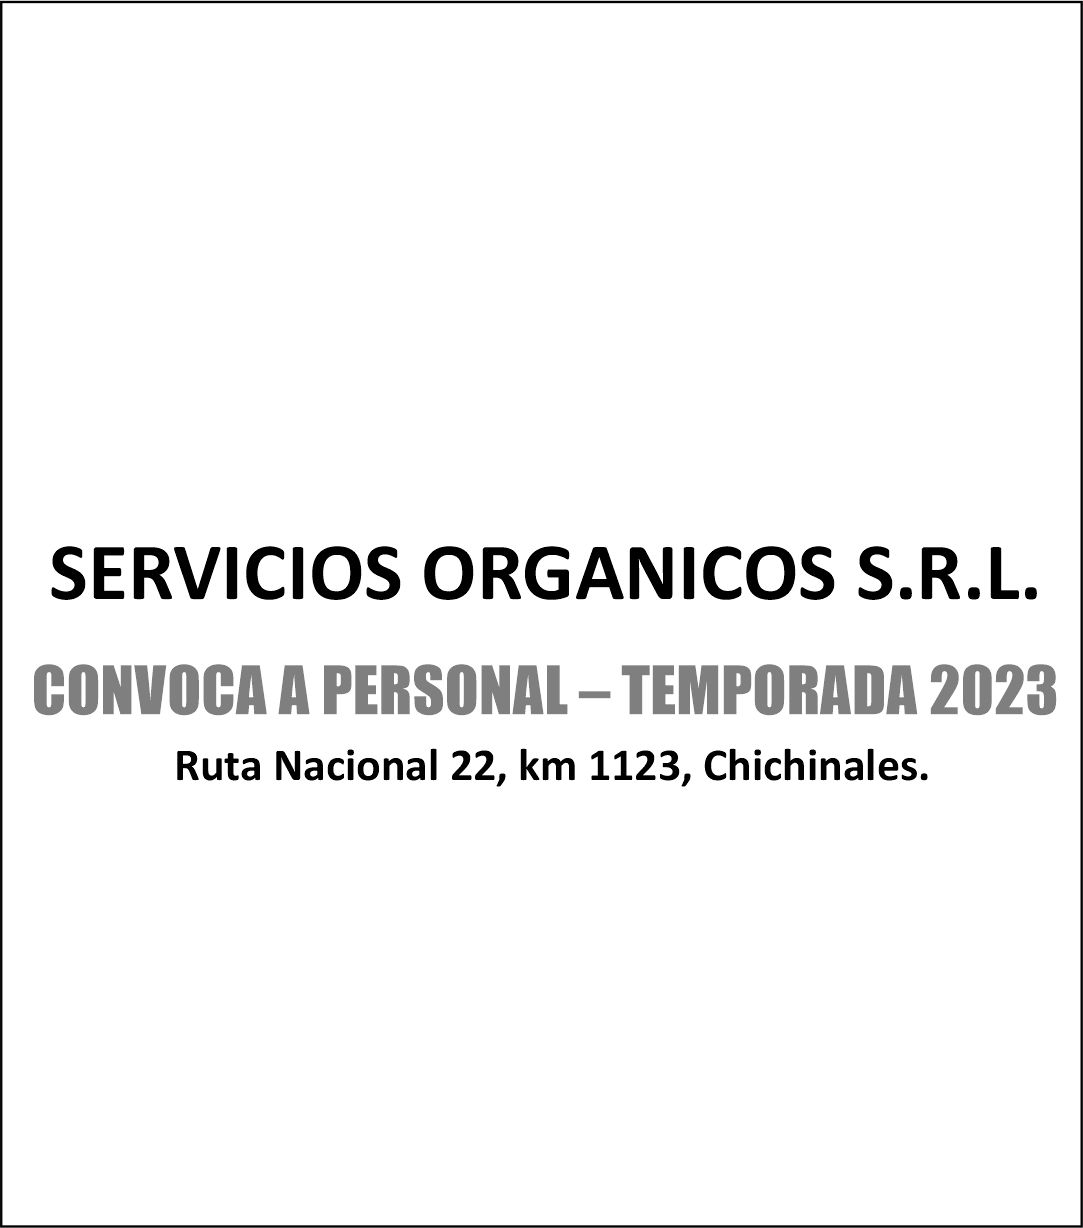 SERVICIOS ORGANICOS S.R.L. CONVOCA A PERSONAL PARA TEMPORADA 2023